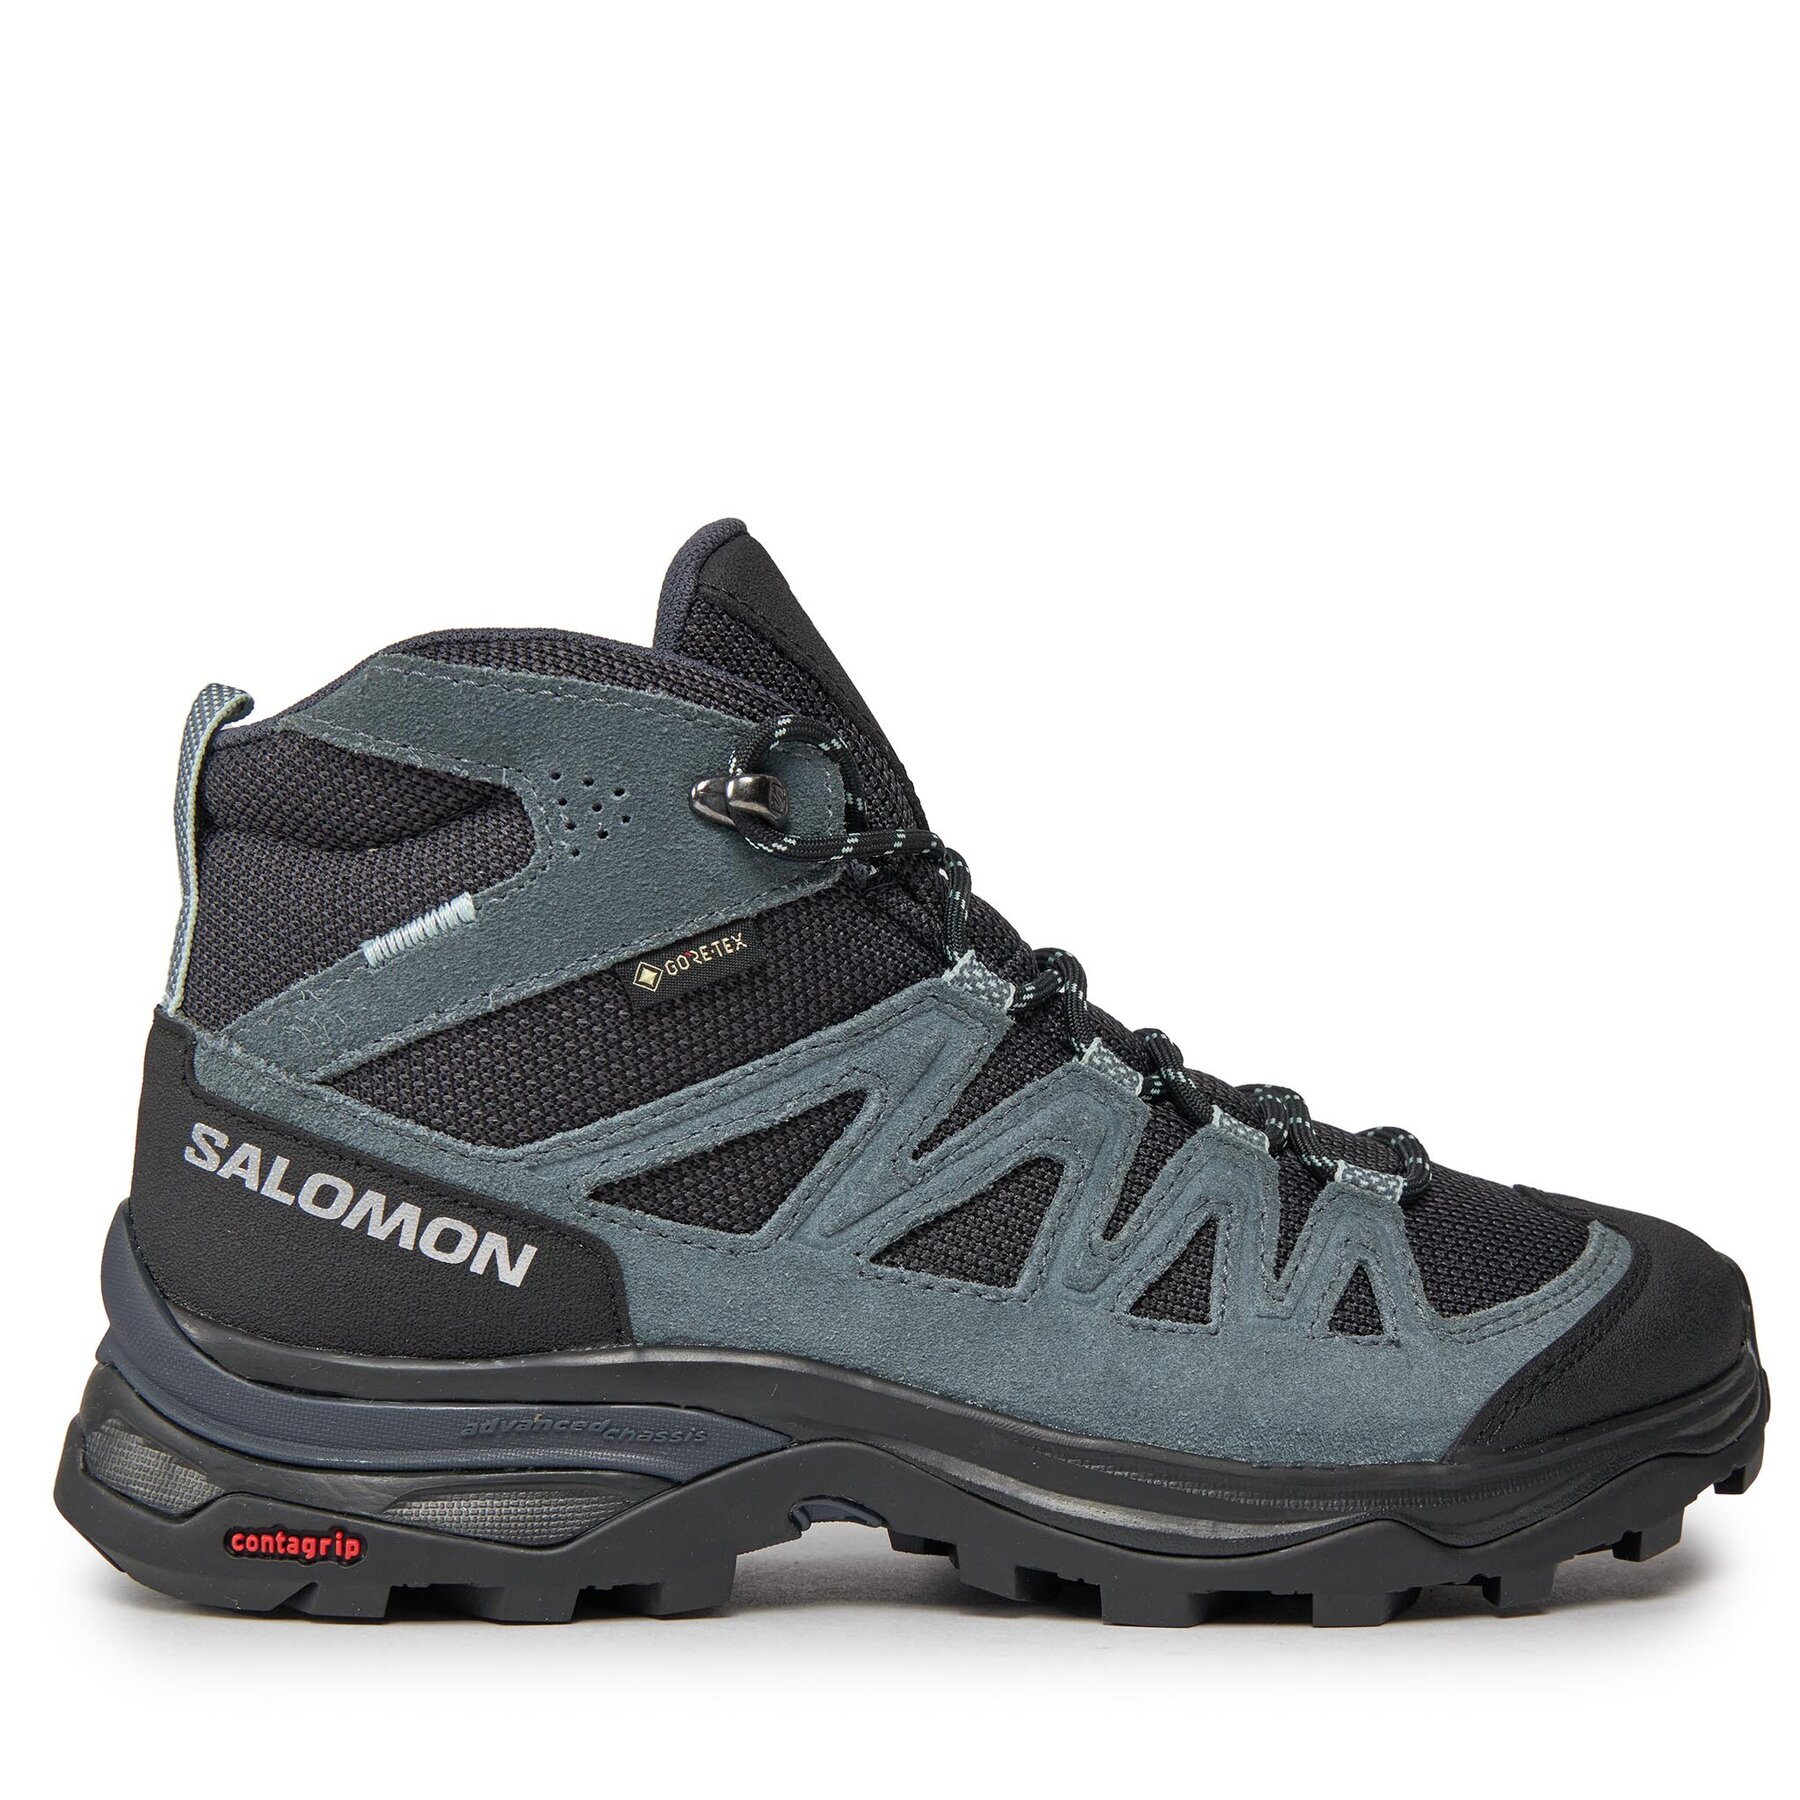 Trekkingschuhe Salomon X Ward Leather Mid GORE-TEX L47182000 Blau von Salomon